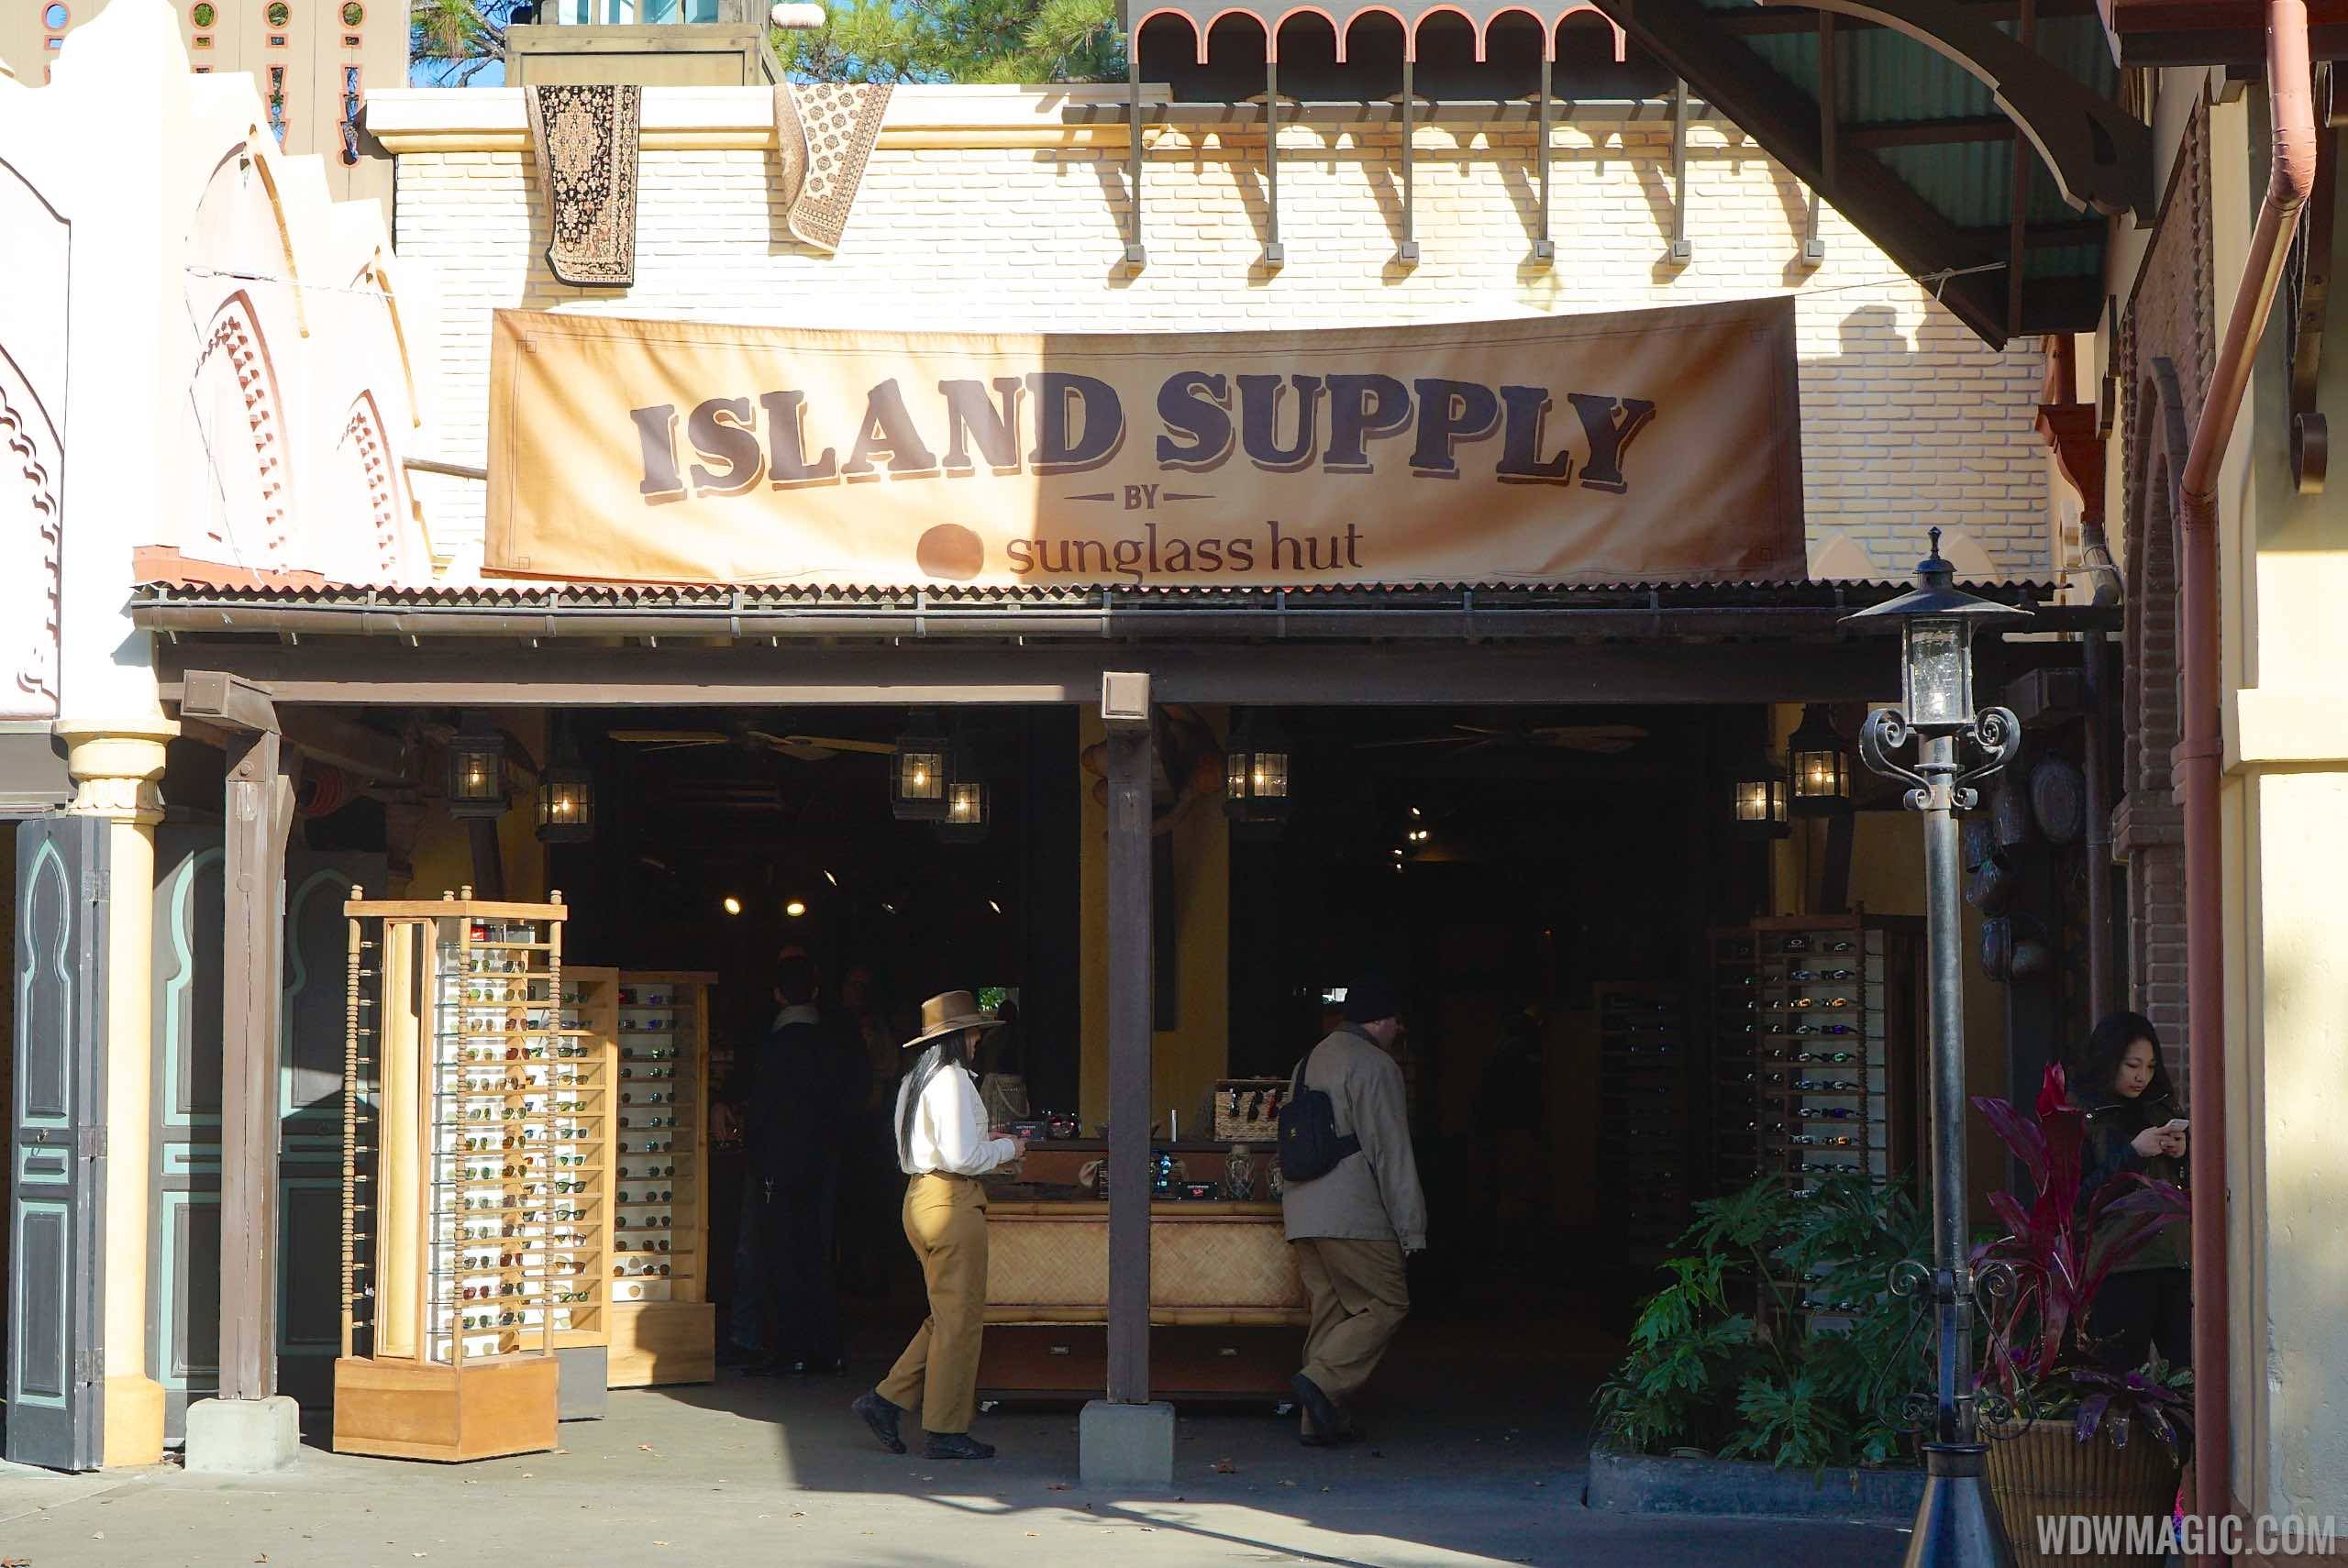 Original Island Supply sign